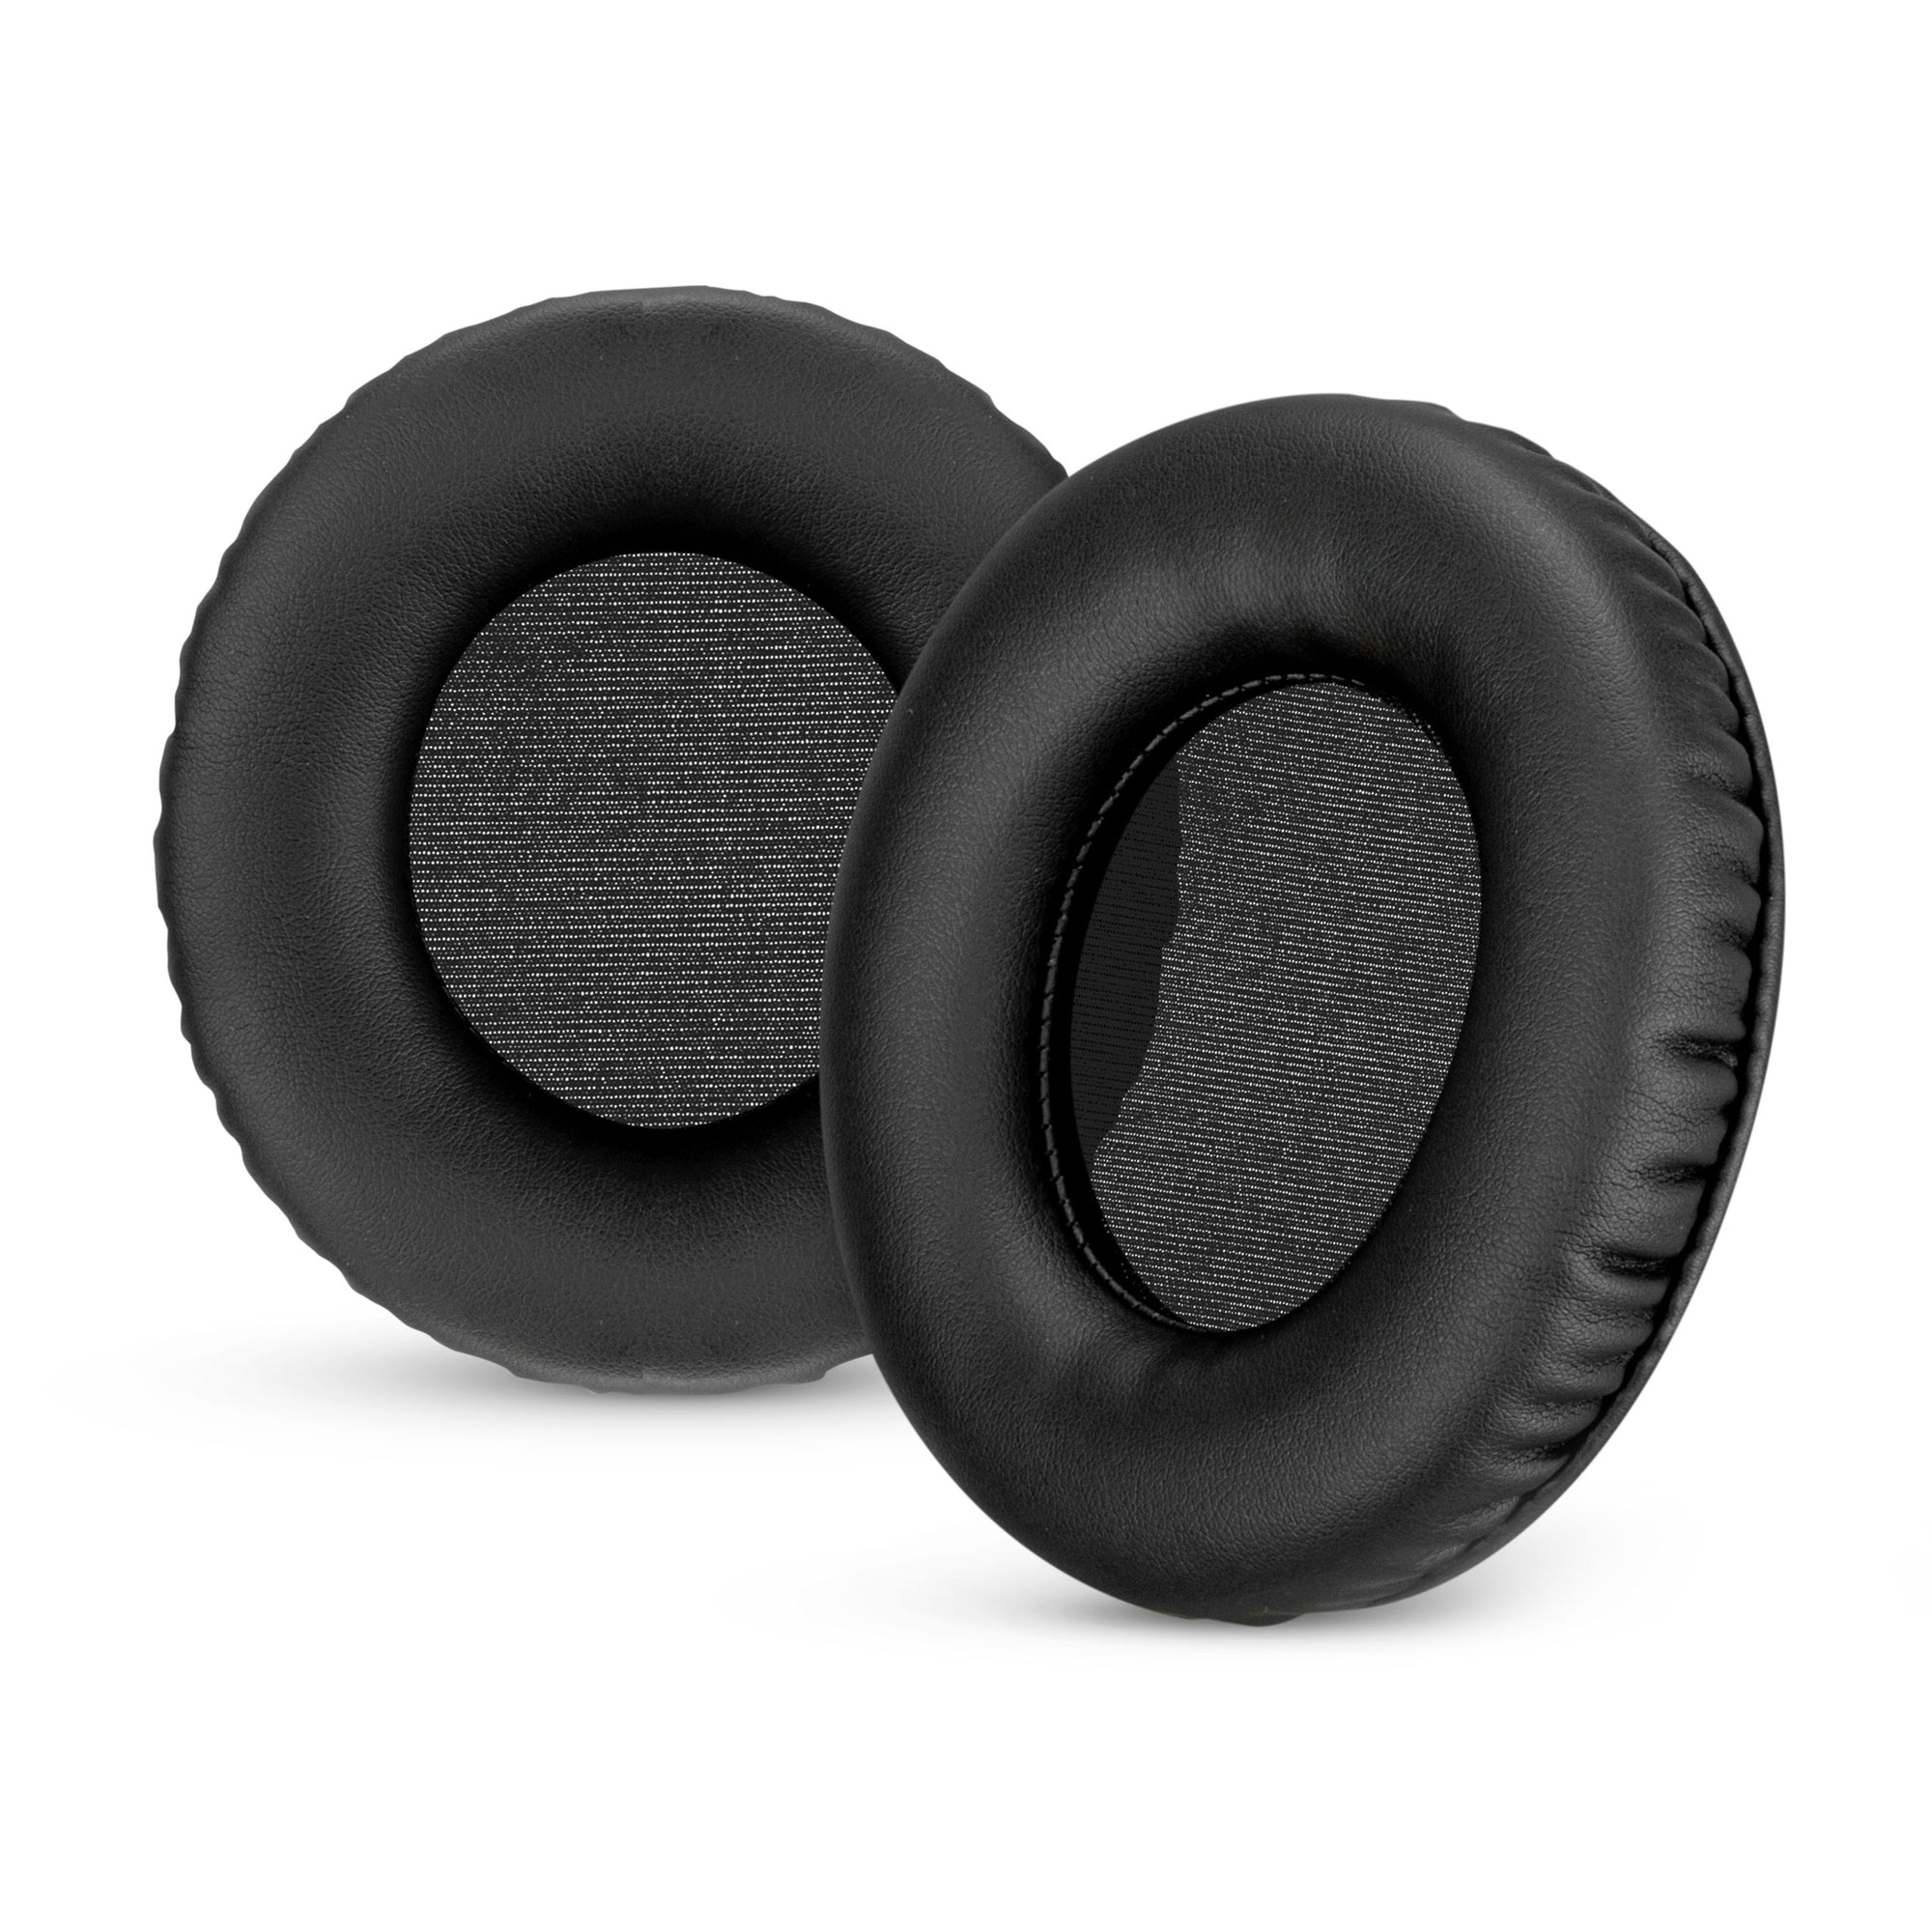 Replacement Earpads for SENNHEISER HD205 Headphones - Soft PU Leather & High Grade Foam